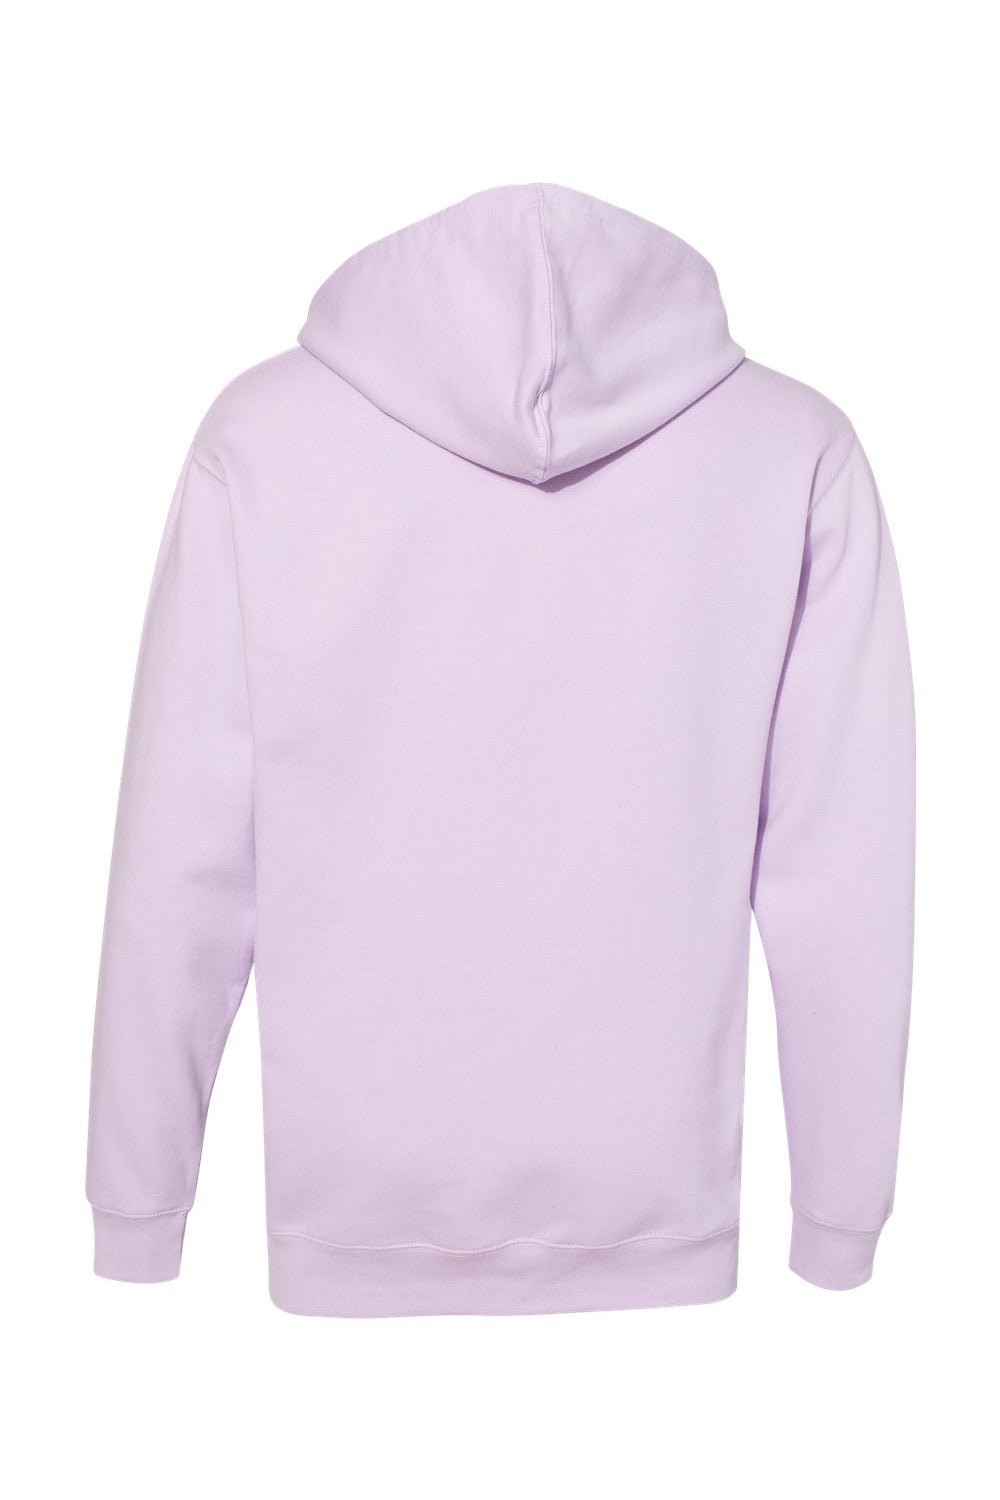 Independent Trading Co. SS4500 Mens Hooded Sweatshirt Hoodie Lavender Purple Flat Back